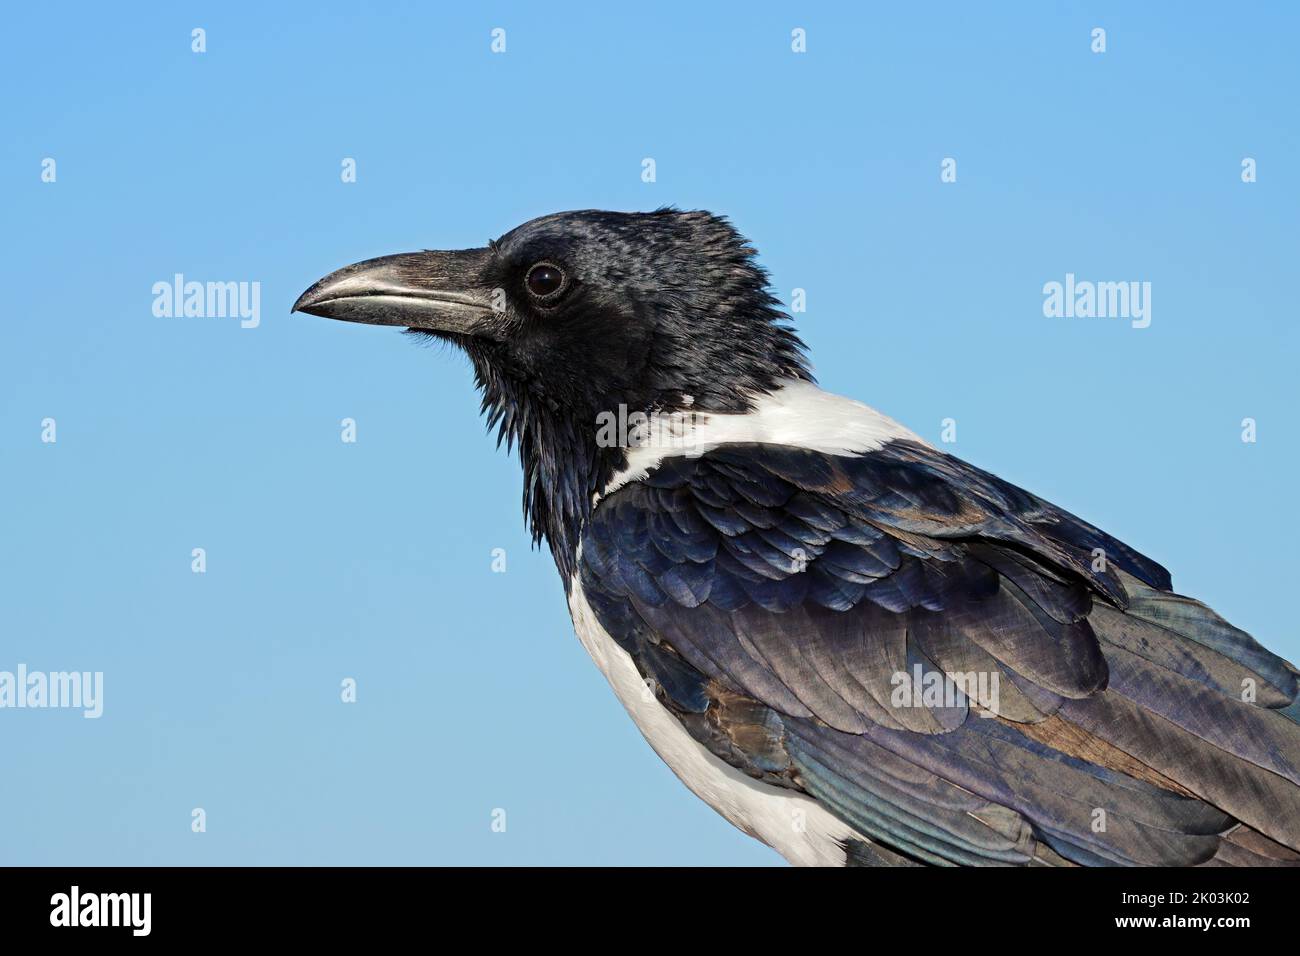 Retrato de un cuervo (corvus albus) contra un cielo azul, Parque Nacional Etosha, Namibia Foto de stock